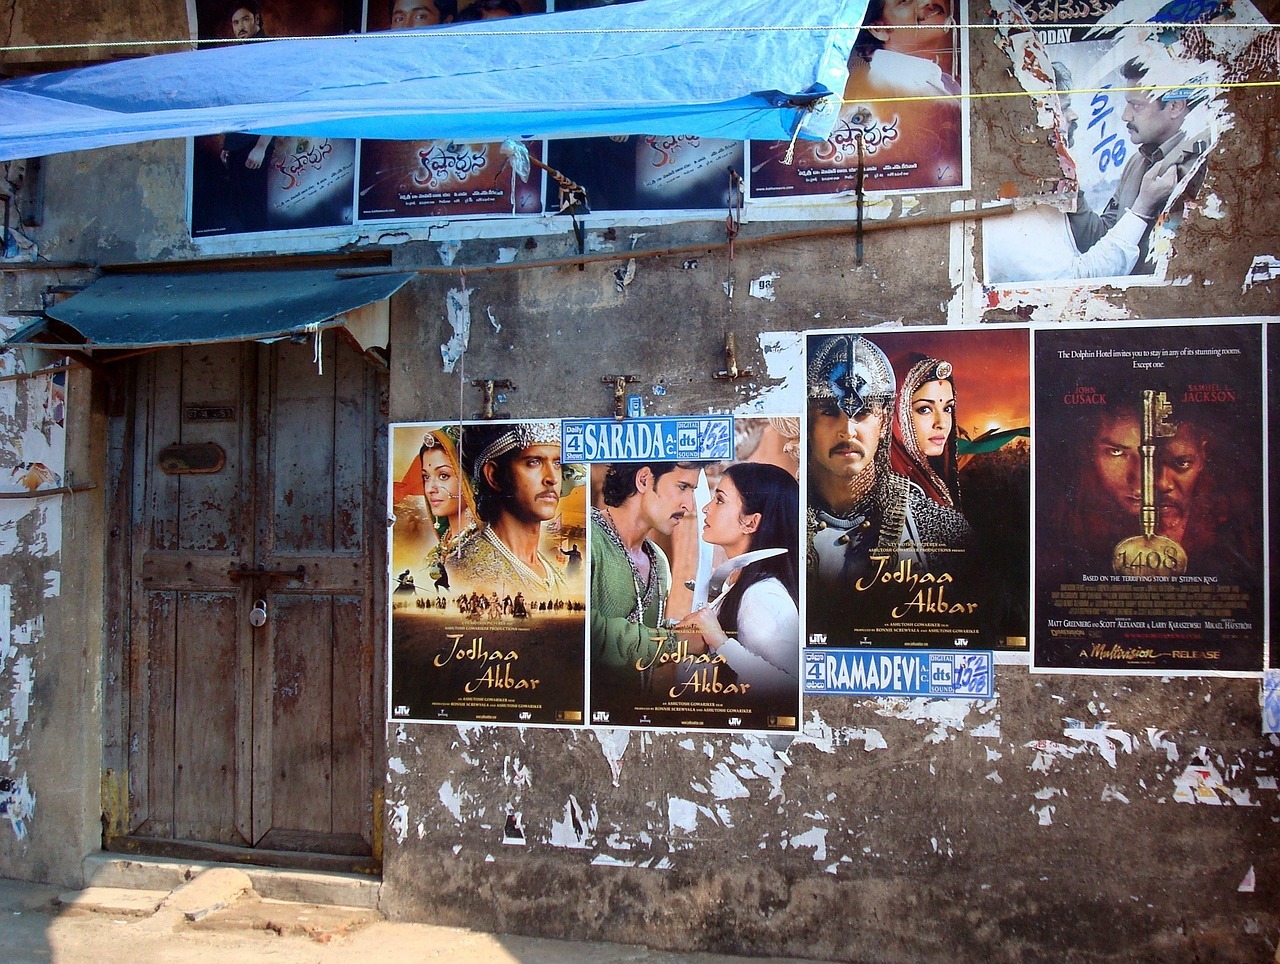 How Do Regional Tamil Films Compare to Mainstream Indian Cinema?